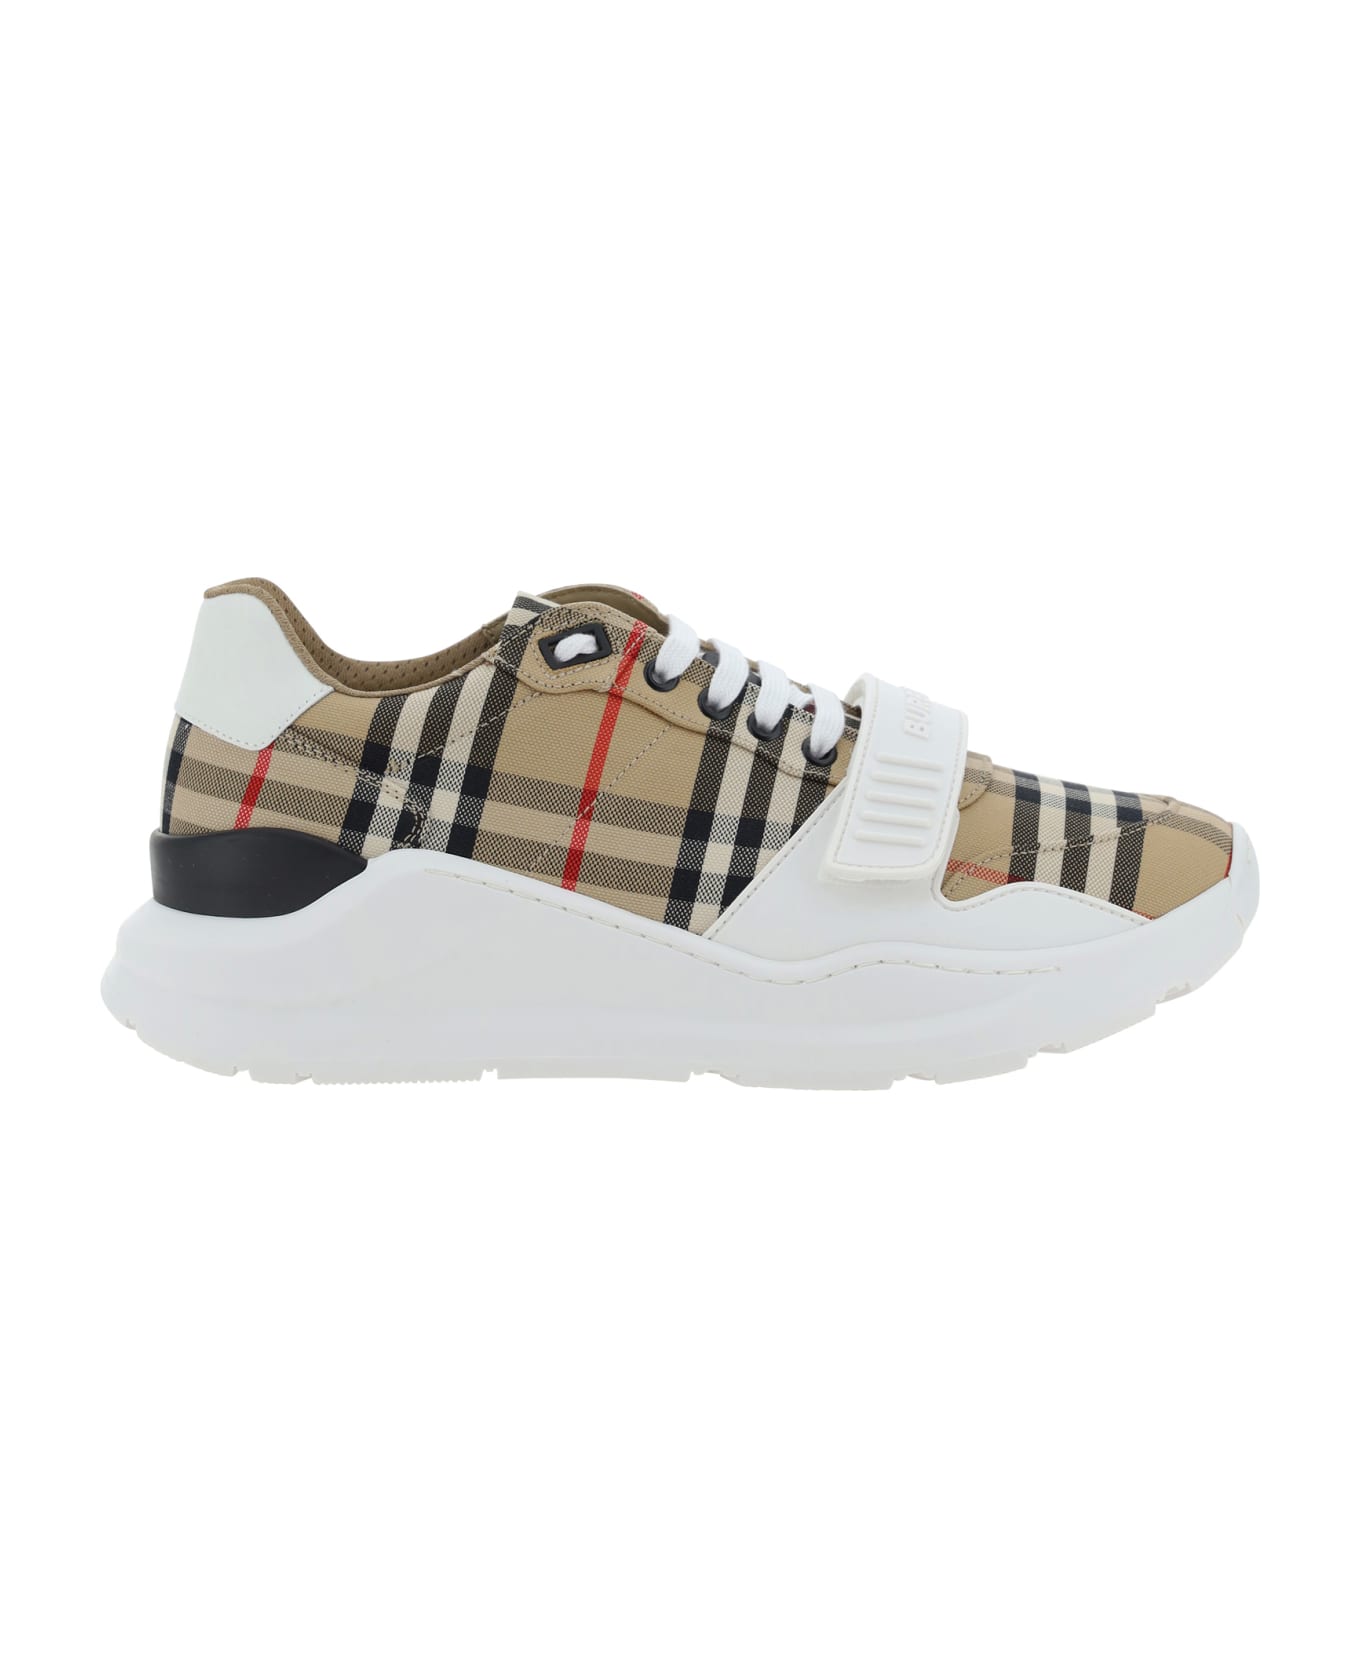 Burberry New Regis Sneakers - NEUTRALS/WHITE